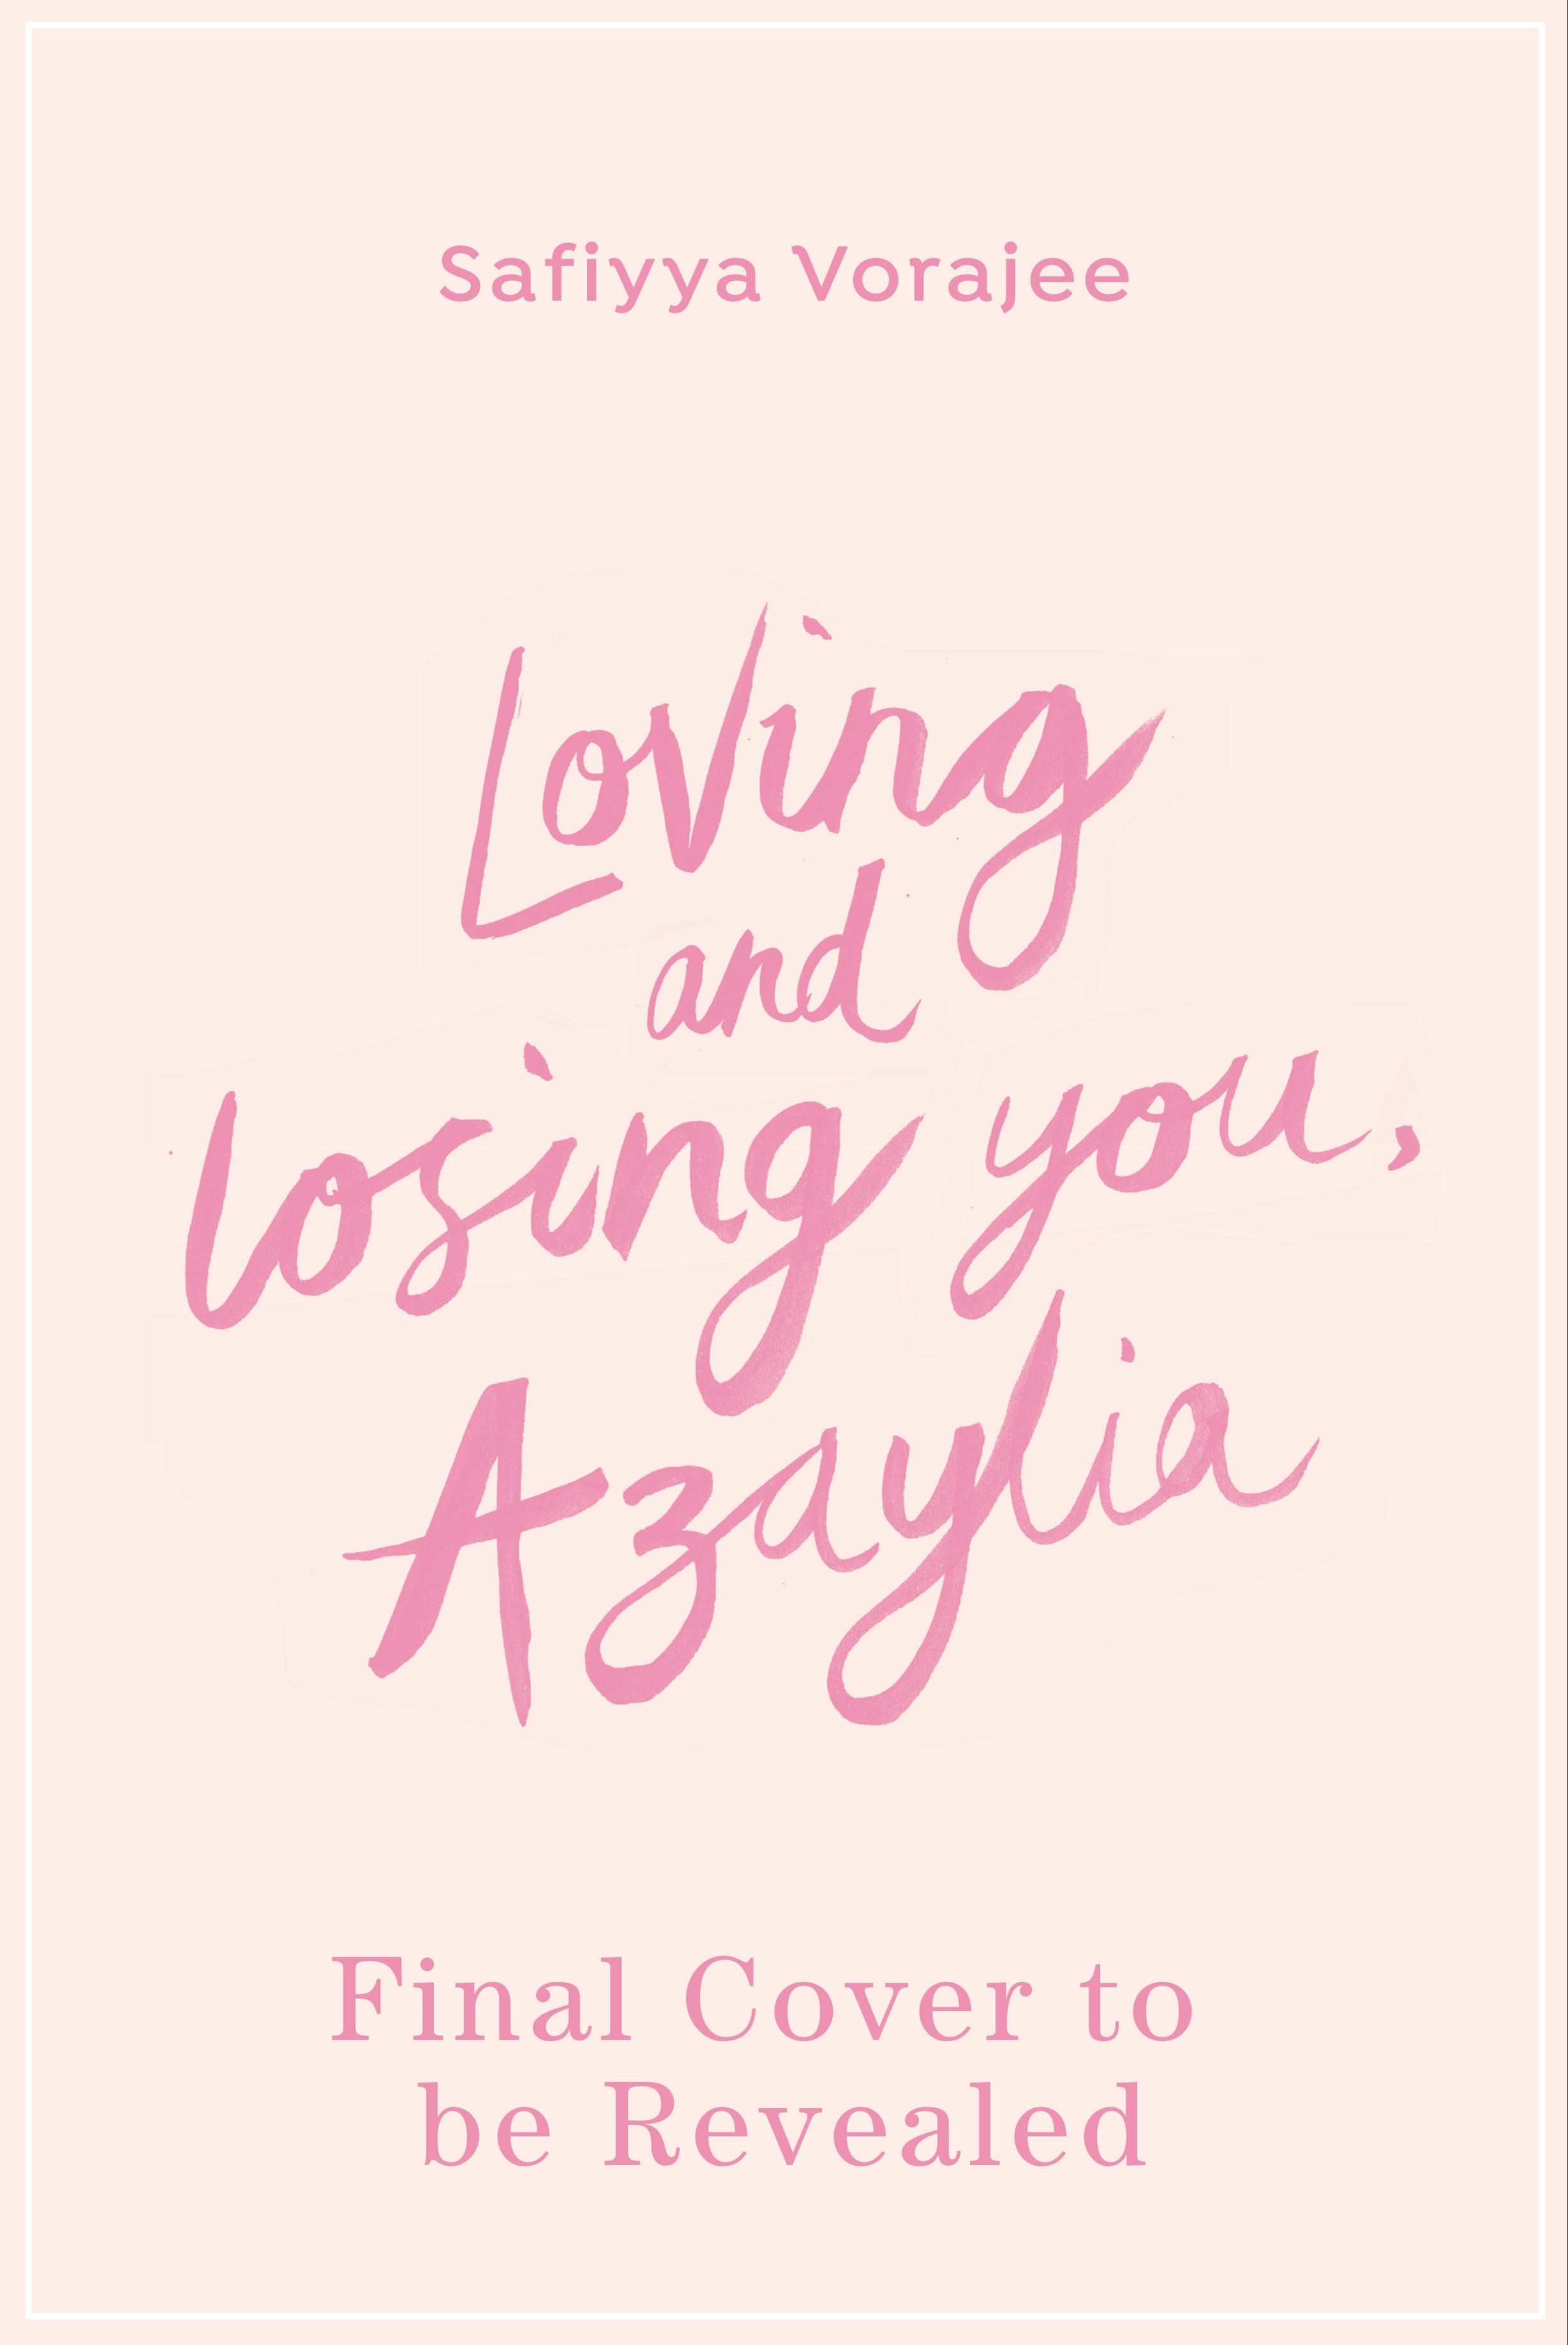 Book “Loving and Losing You, Azaylia” by Safiyya Vorajee — April 28, 2022